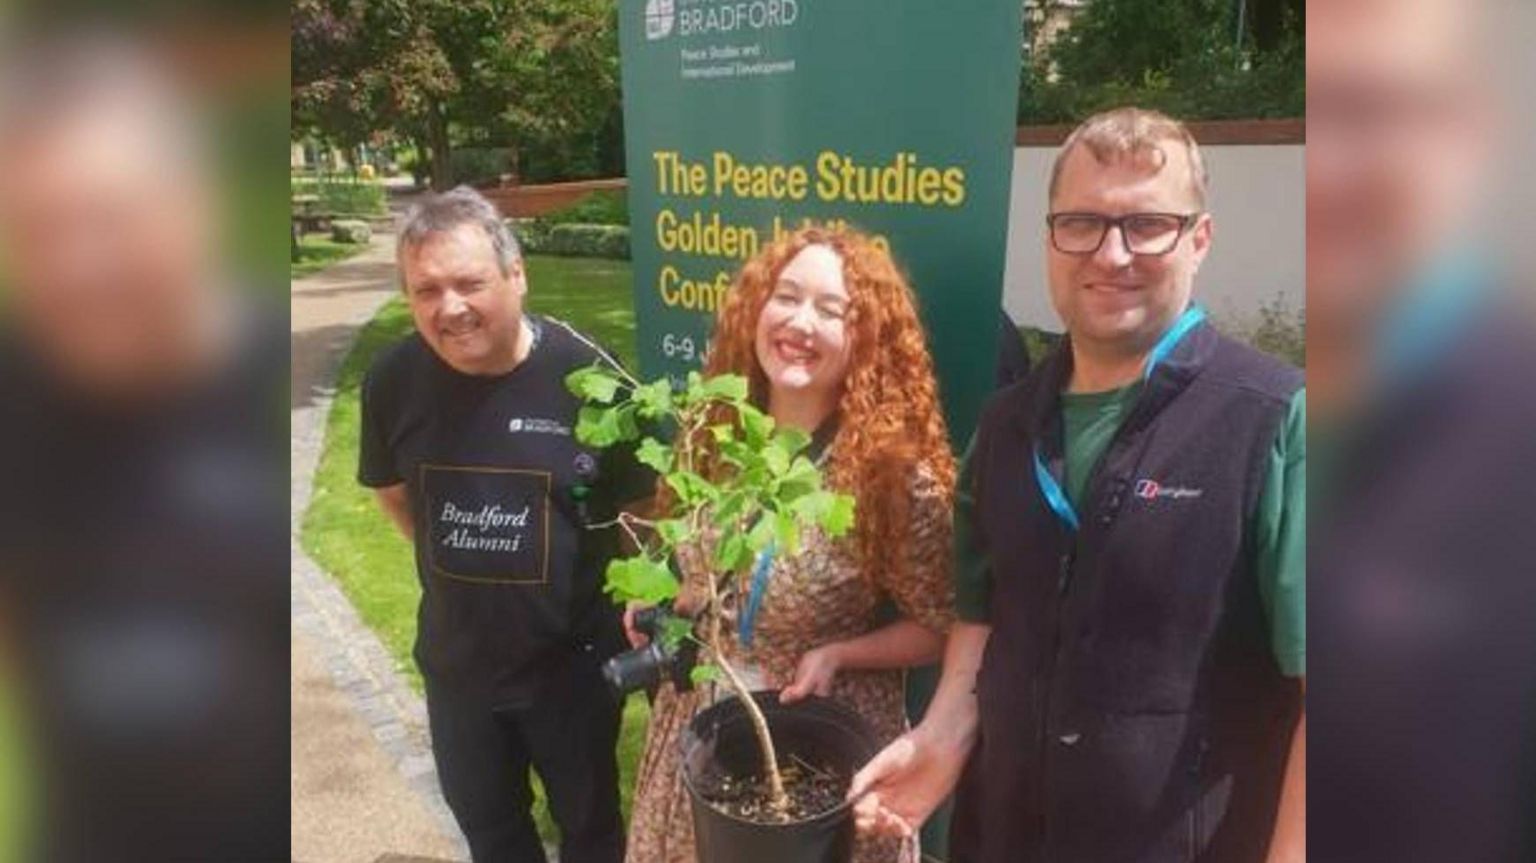 The planting team at the University of Bradford